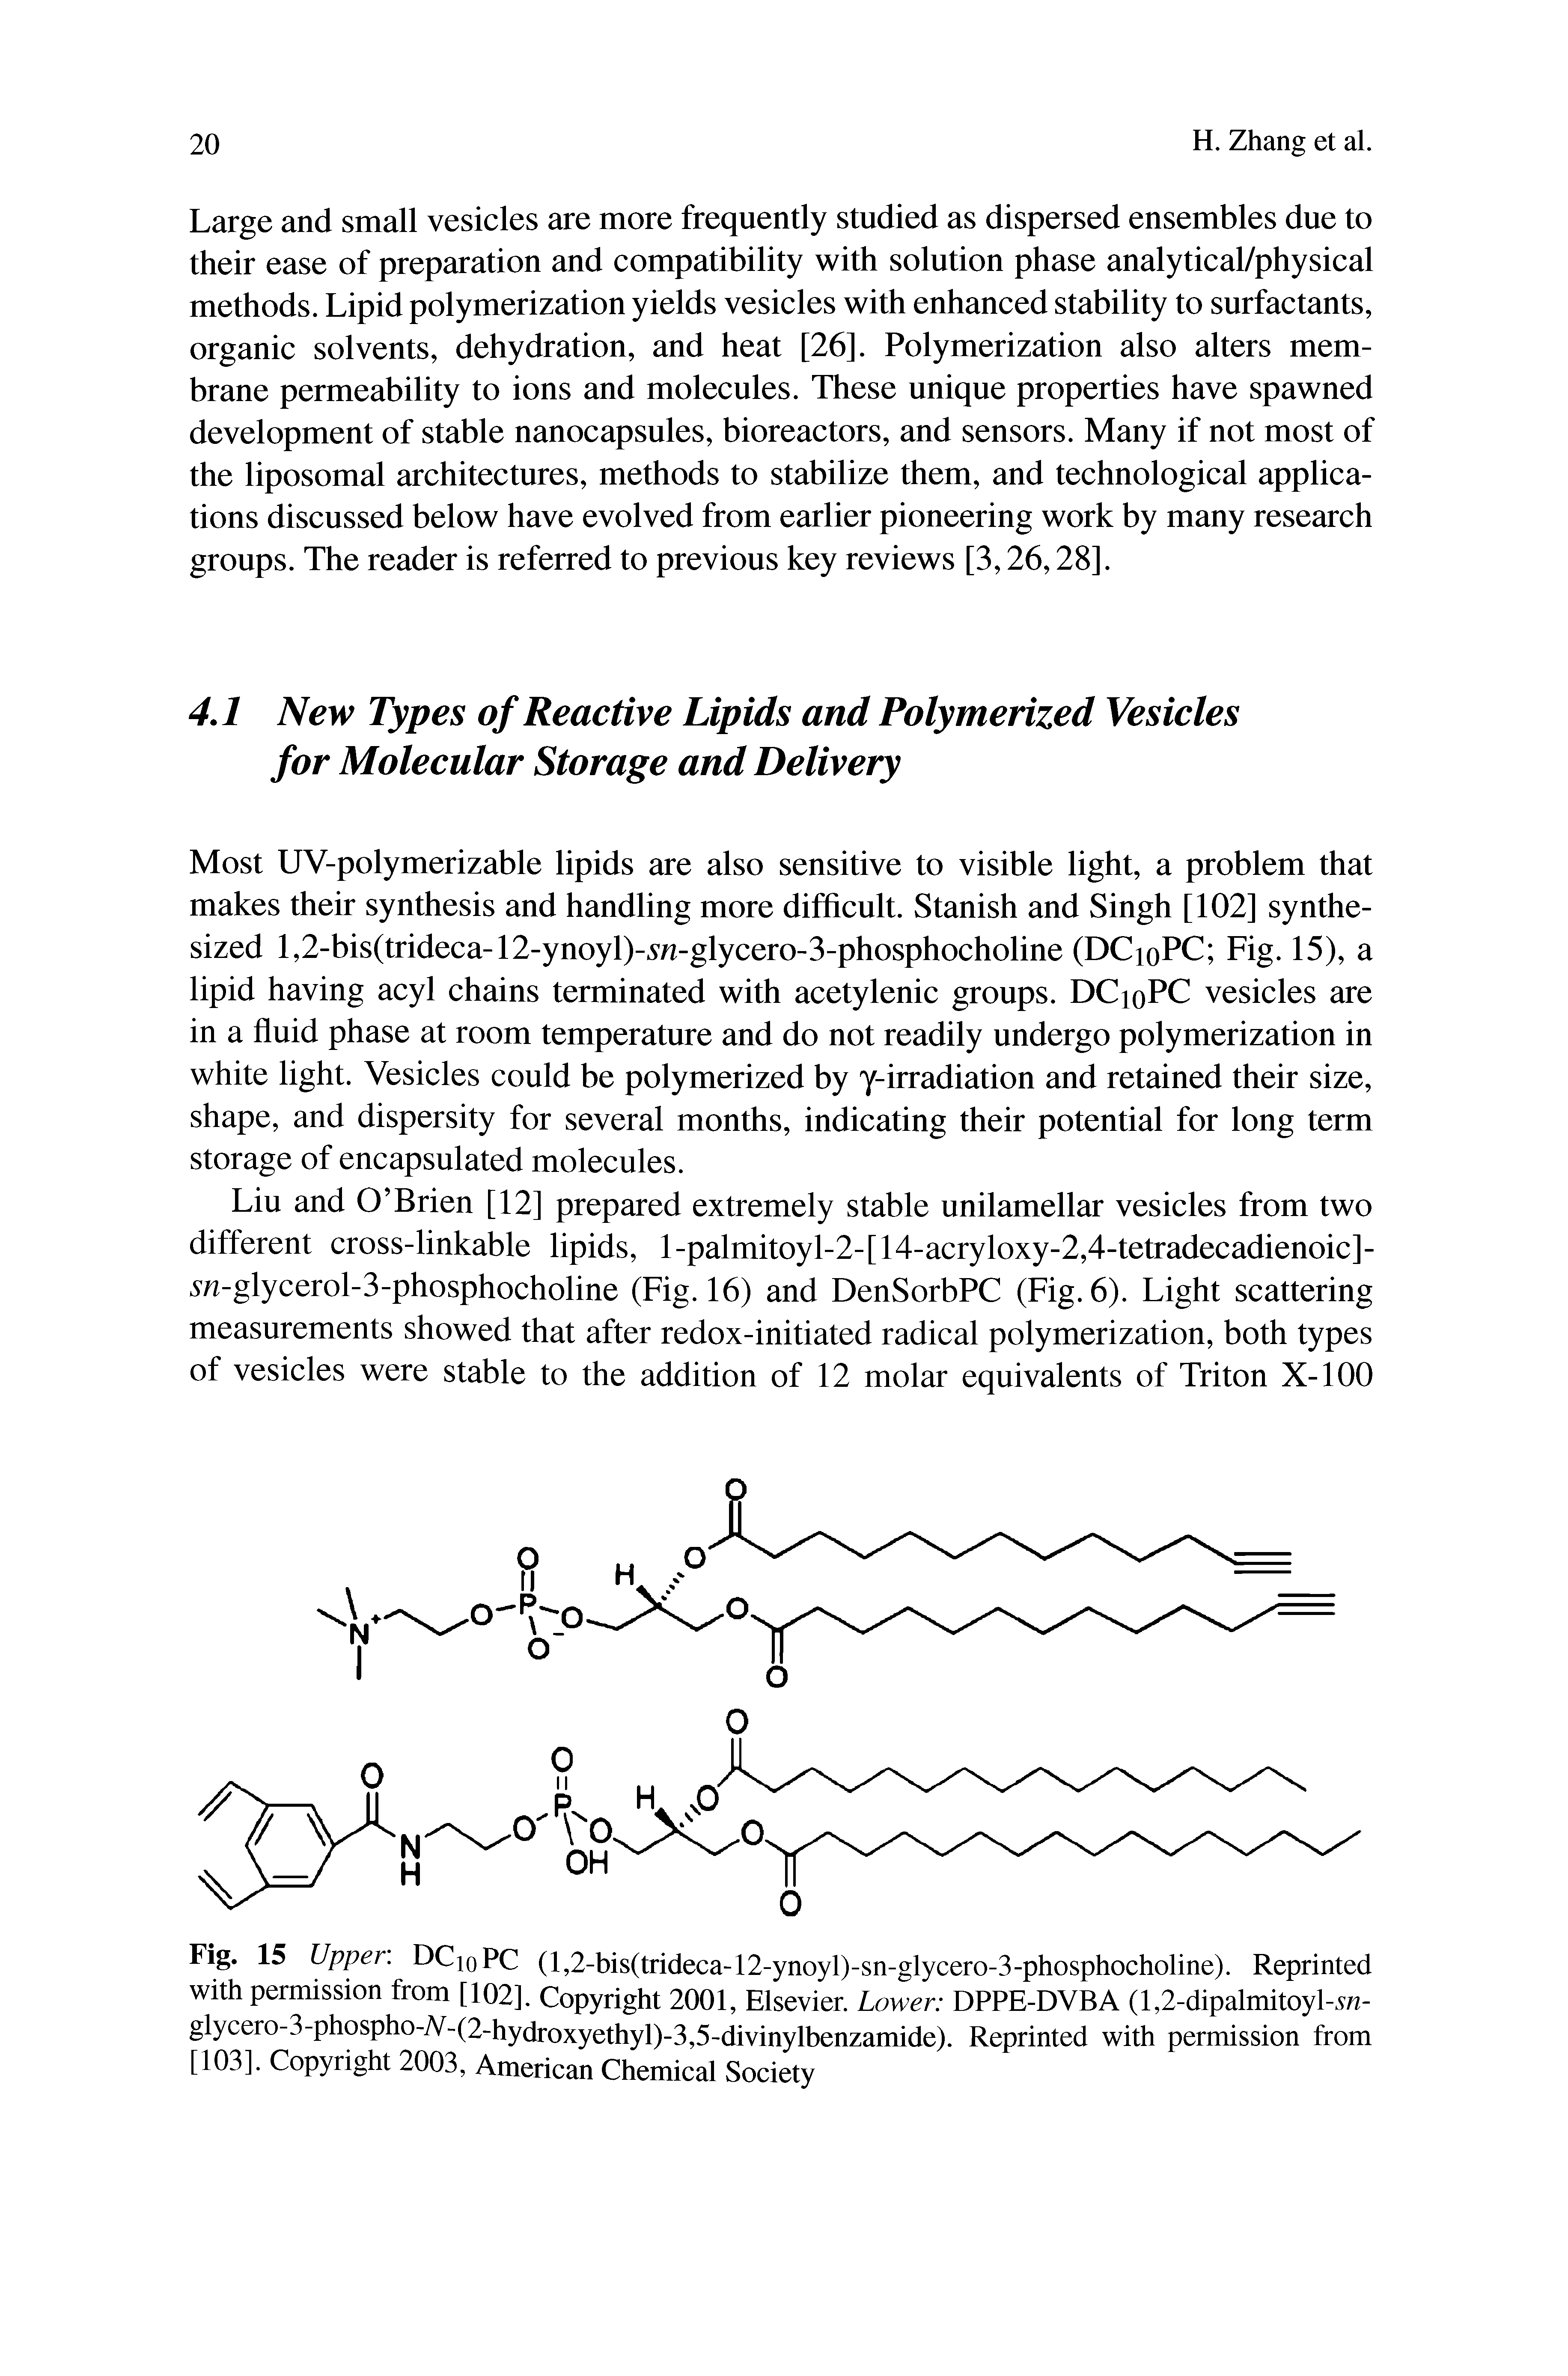 Fig. 15 Upper. DC PC (l,2-bis(trideca-12-ynoyl)-sn-glycero-3-phosphocholine). Reprinted with permission from [102]. Copyright 2001, Elsevier. Lower DPPE-DVBA (1,2-dipalmitoyl- -glycero-3-phospho-7V-(2-hydroxyethyl)-3,5-divinylbenzamide). Reprinted with permission from [103]. Copyright 2003, American Chemical Society...